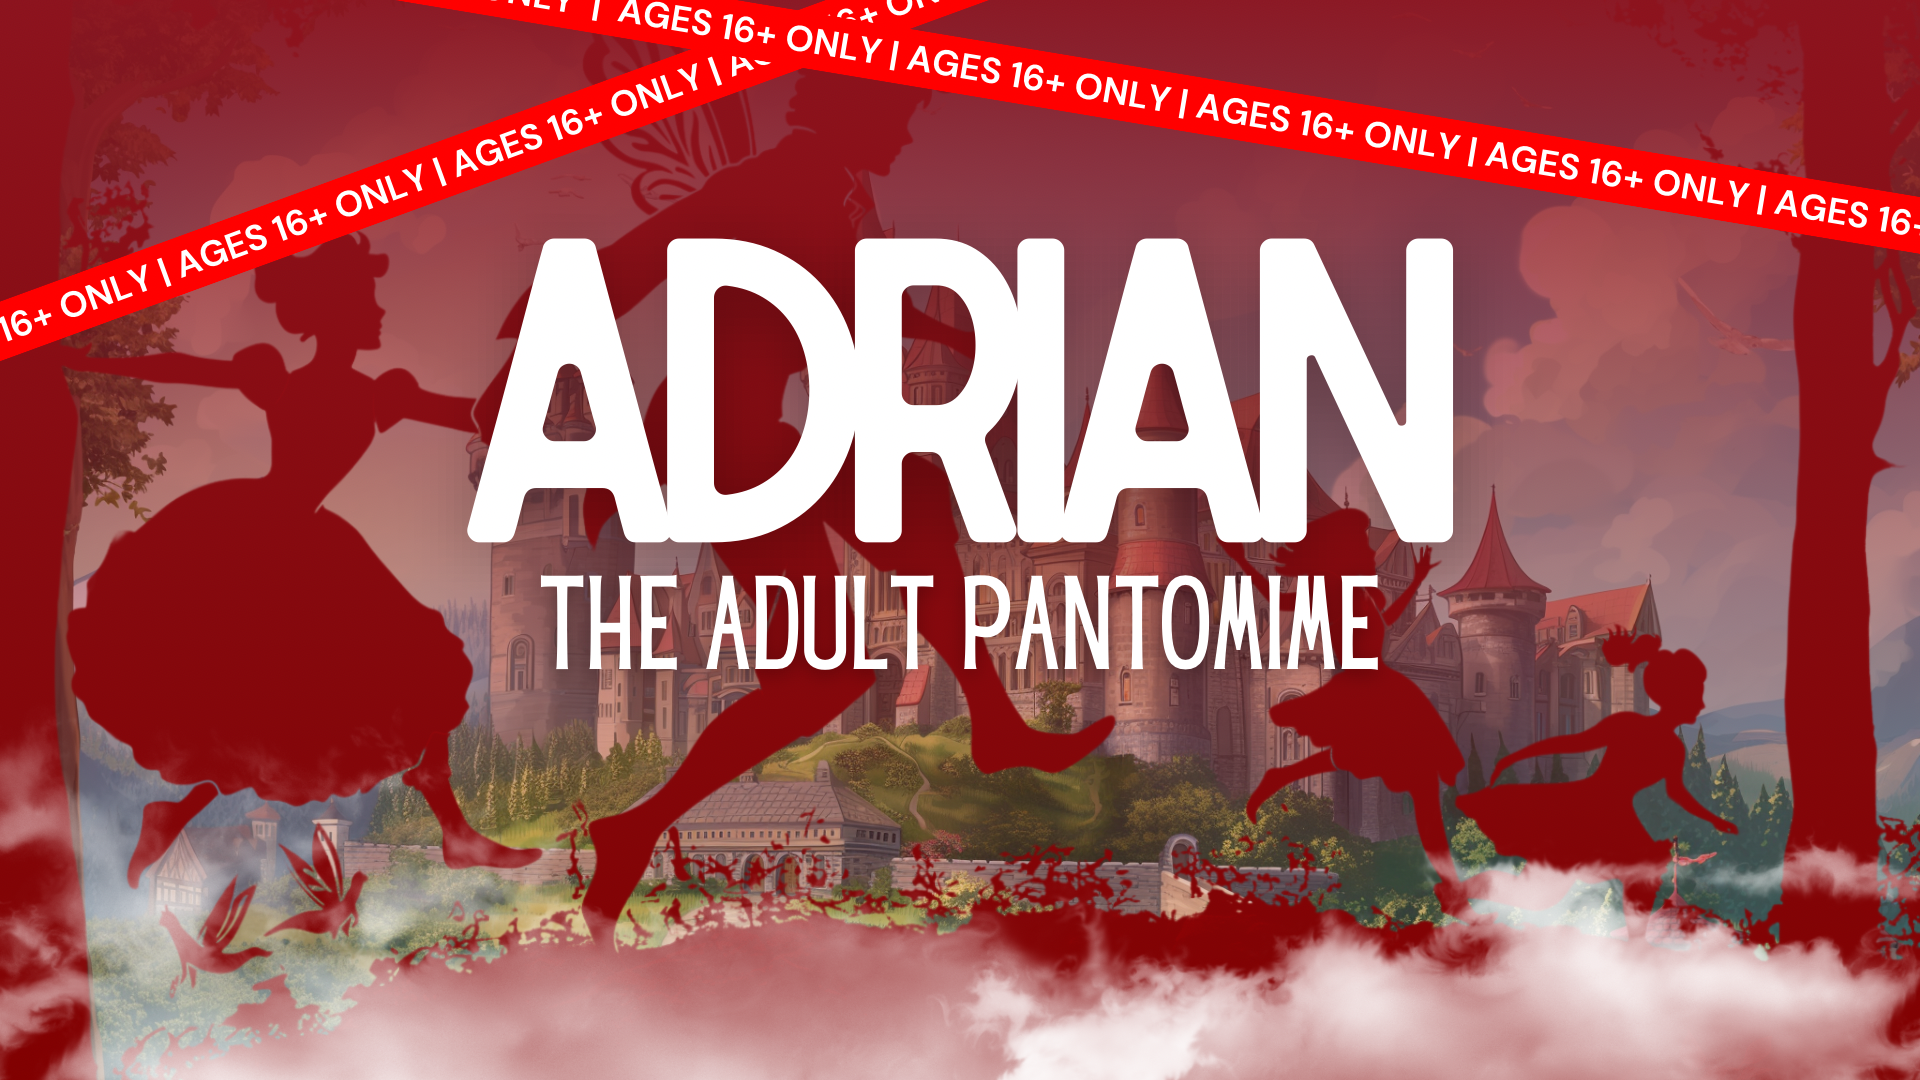 Adult Panto: Adrian The Pantomime